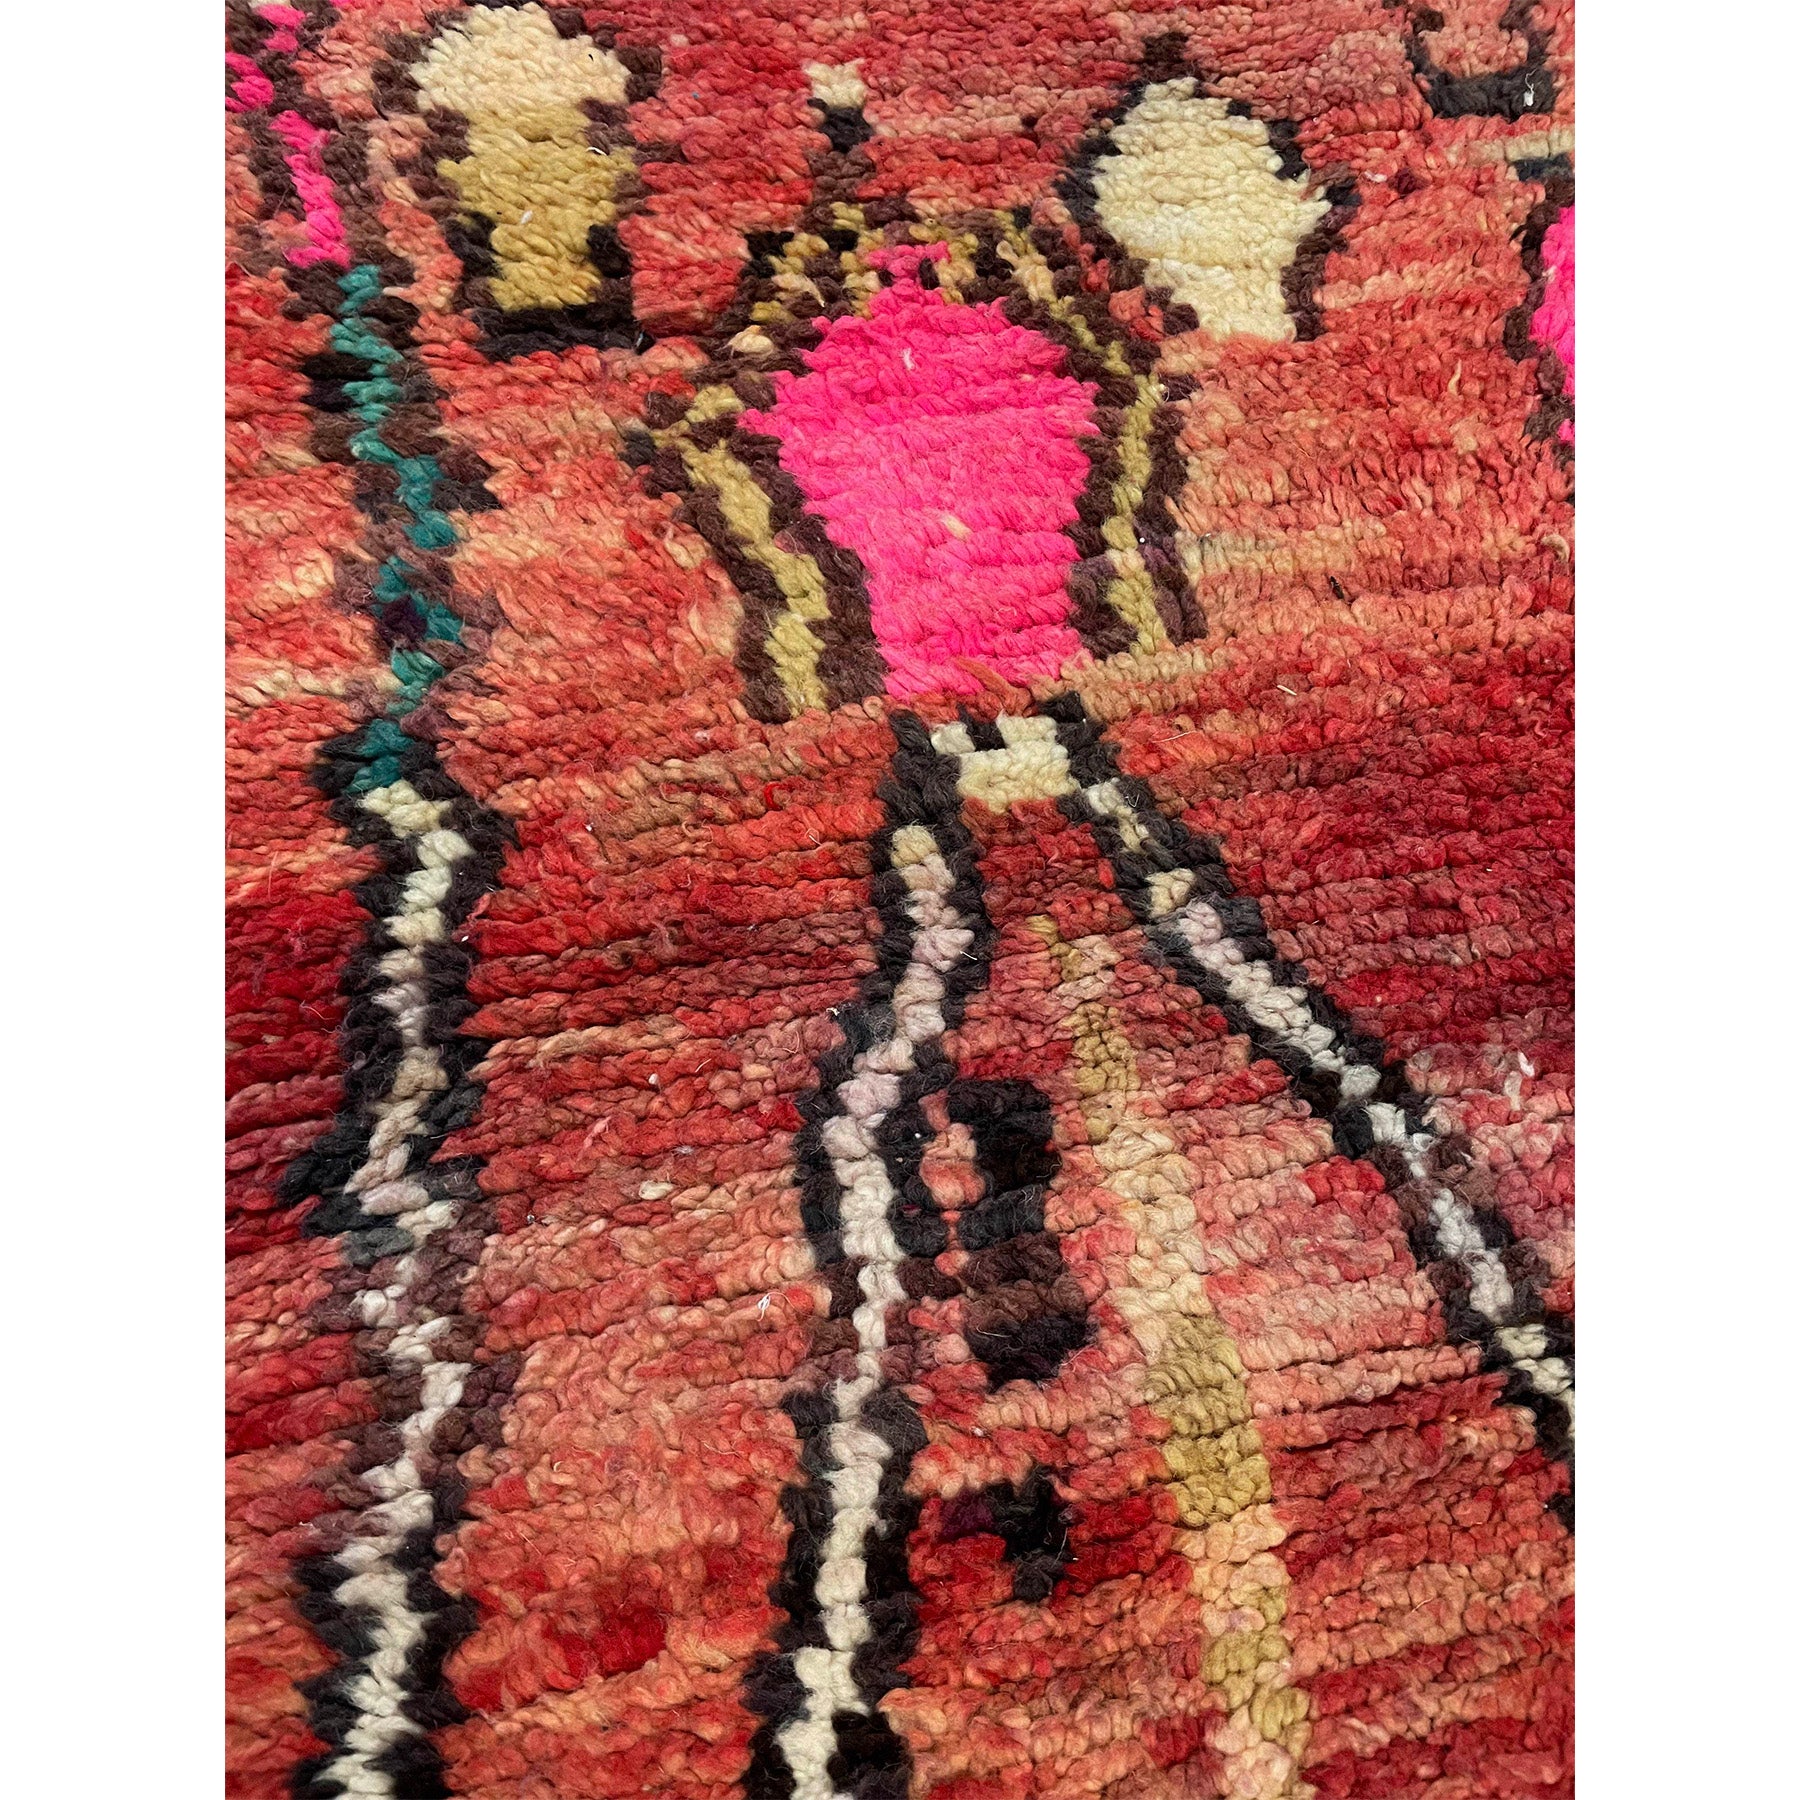 Handknotted red vintage Moroccan berber runner rug - Kantara | Moroccan Rugs